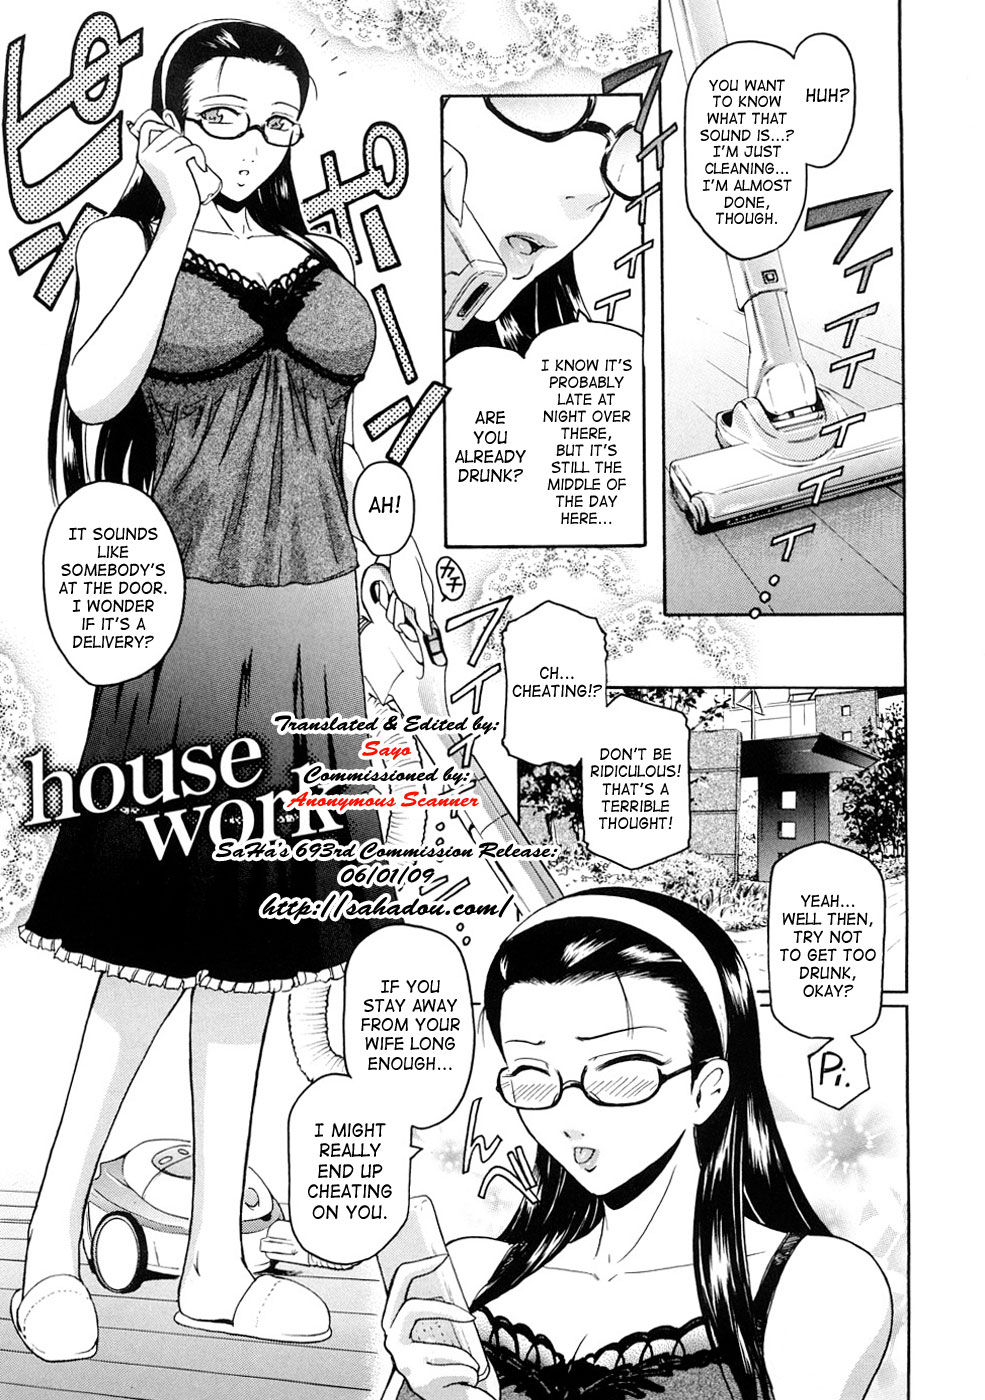 Hentai Manga Comic-Second Virgin-Chapter 8 - house work-1